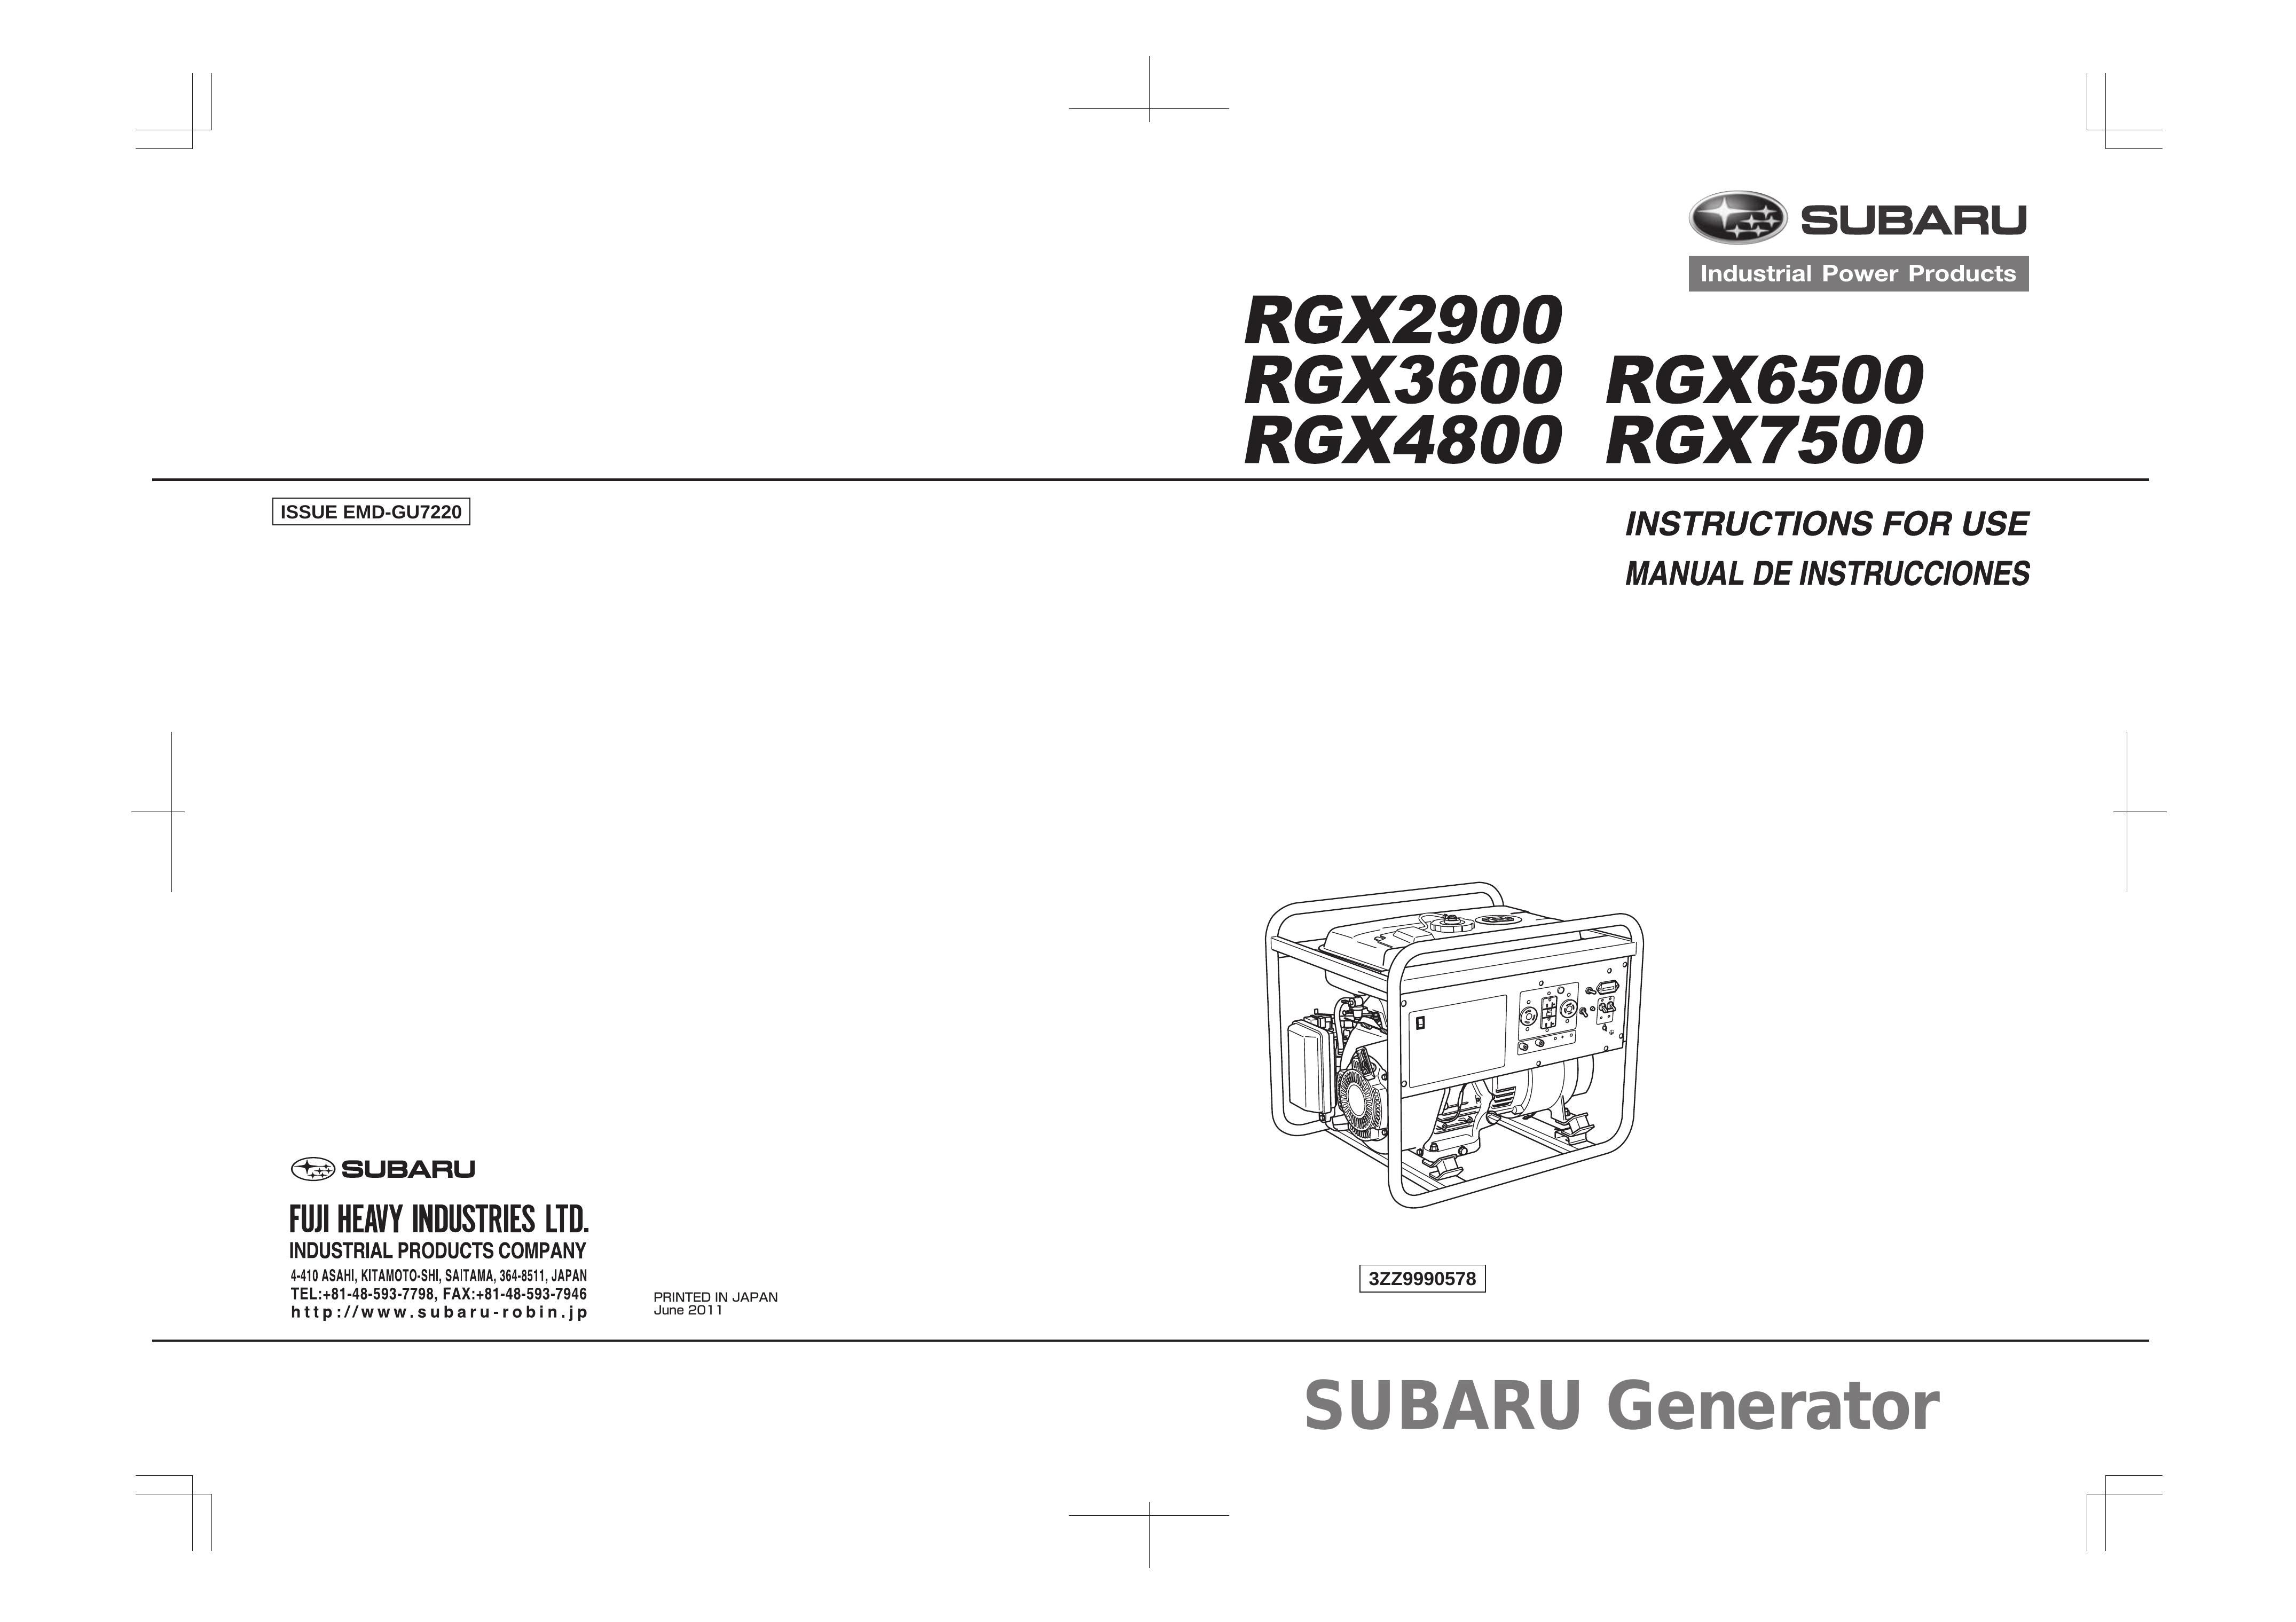 Subaru RGX4800 RGX6500 Portable Generator User Manual